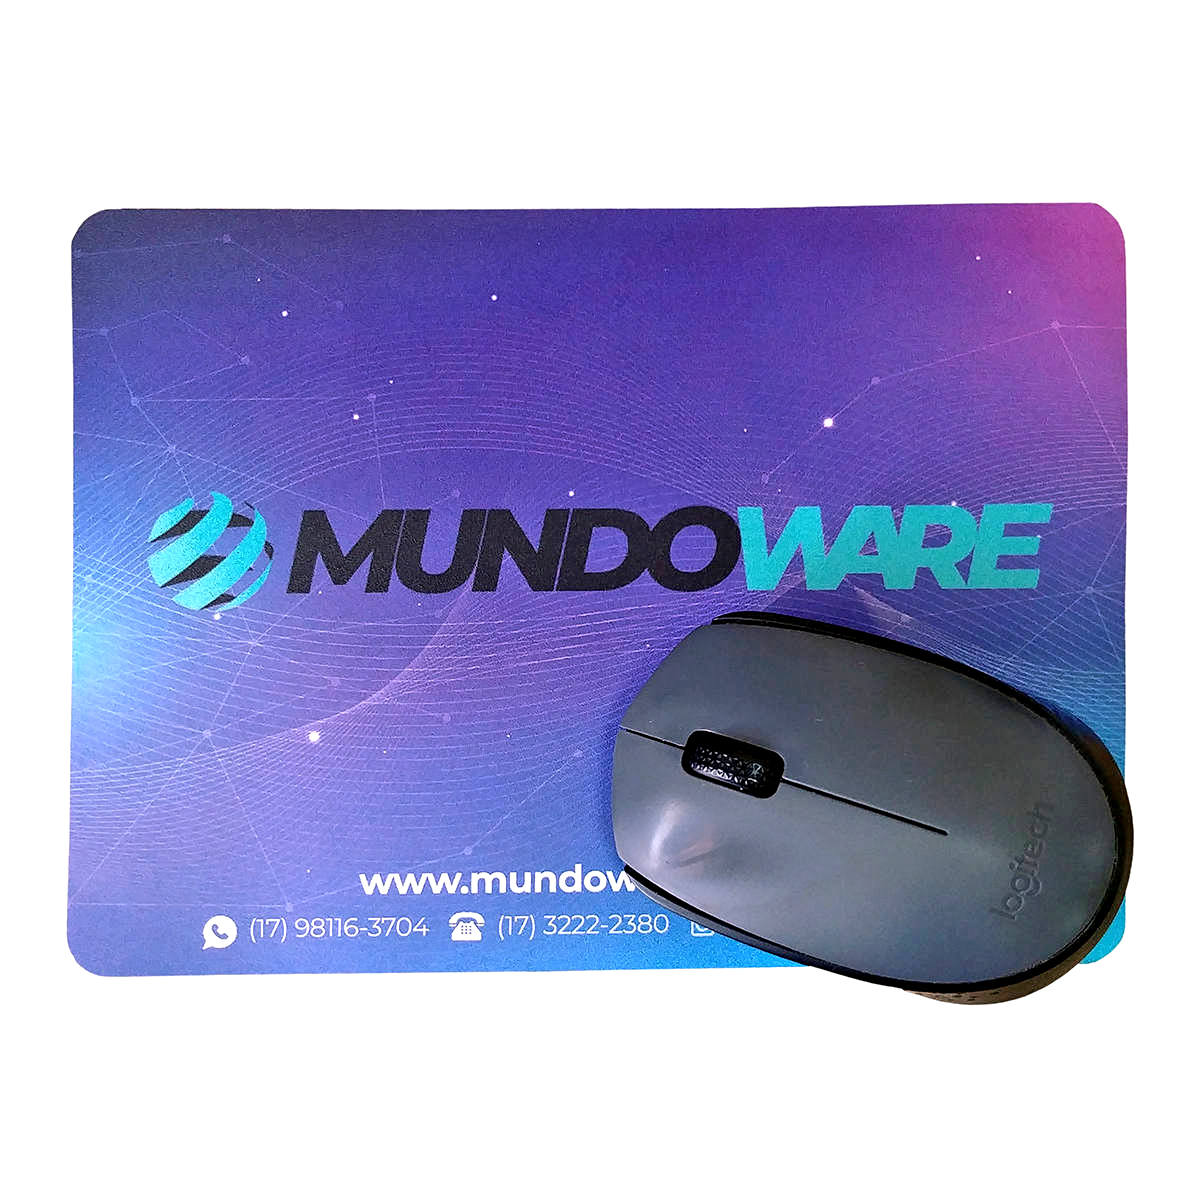 Mouse Pad Mundoware 15x20cm Compacto Base Antiderrapante